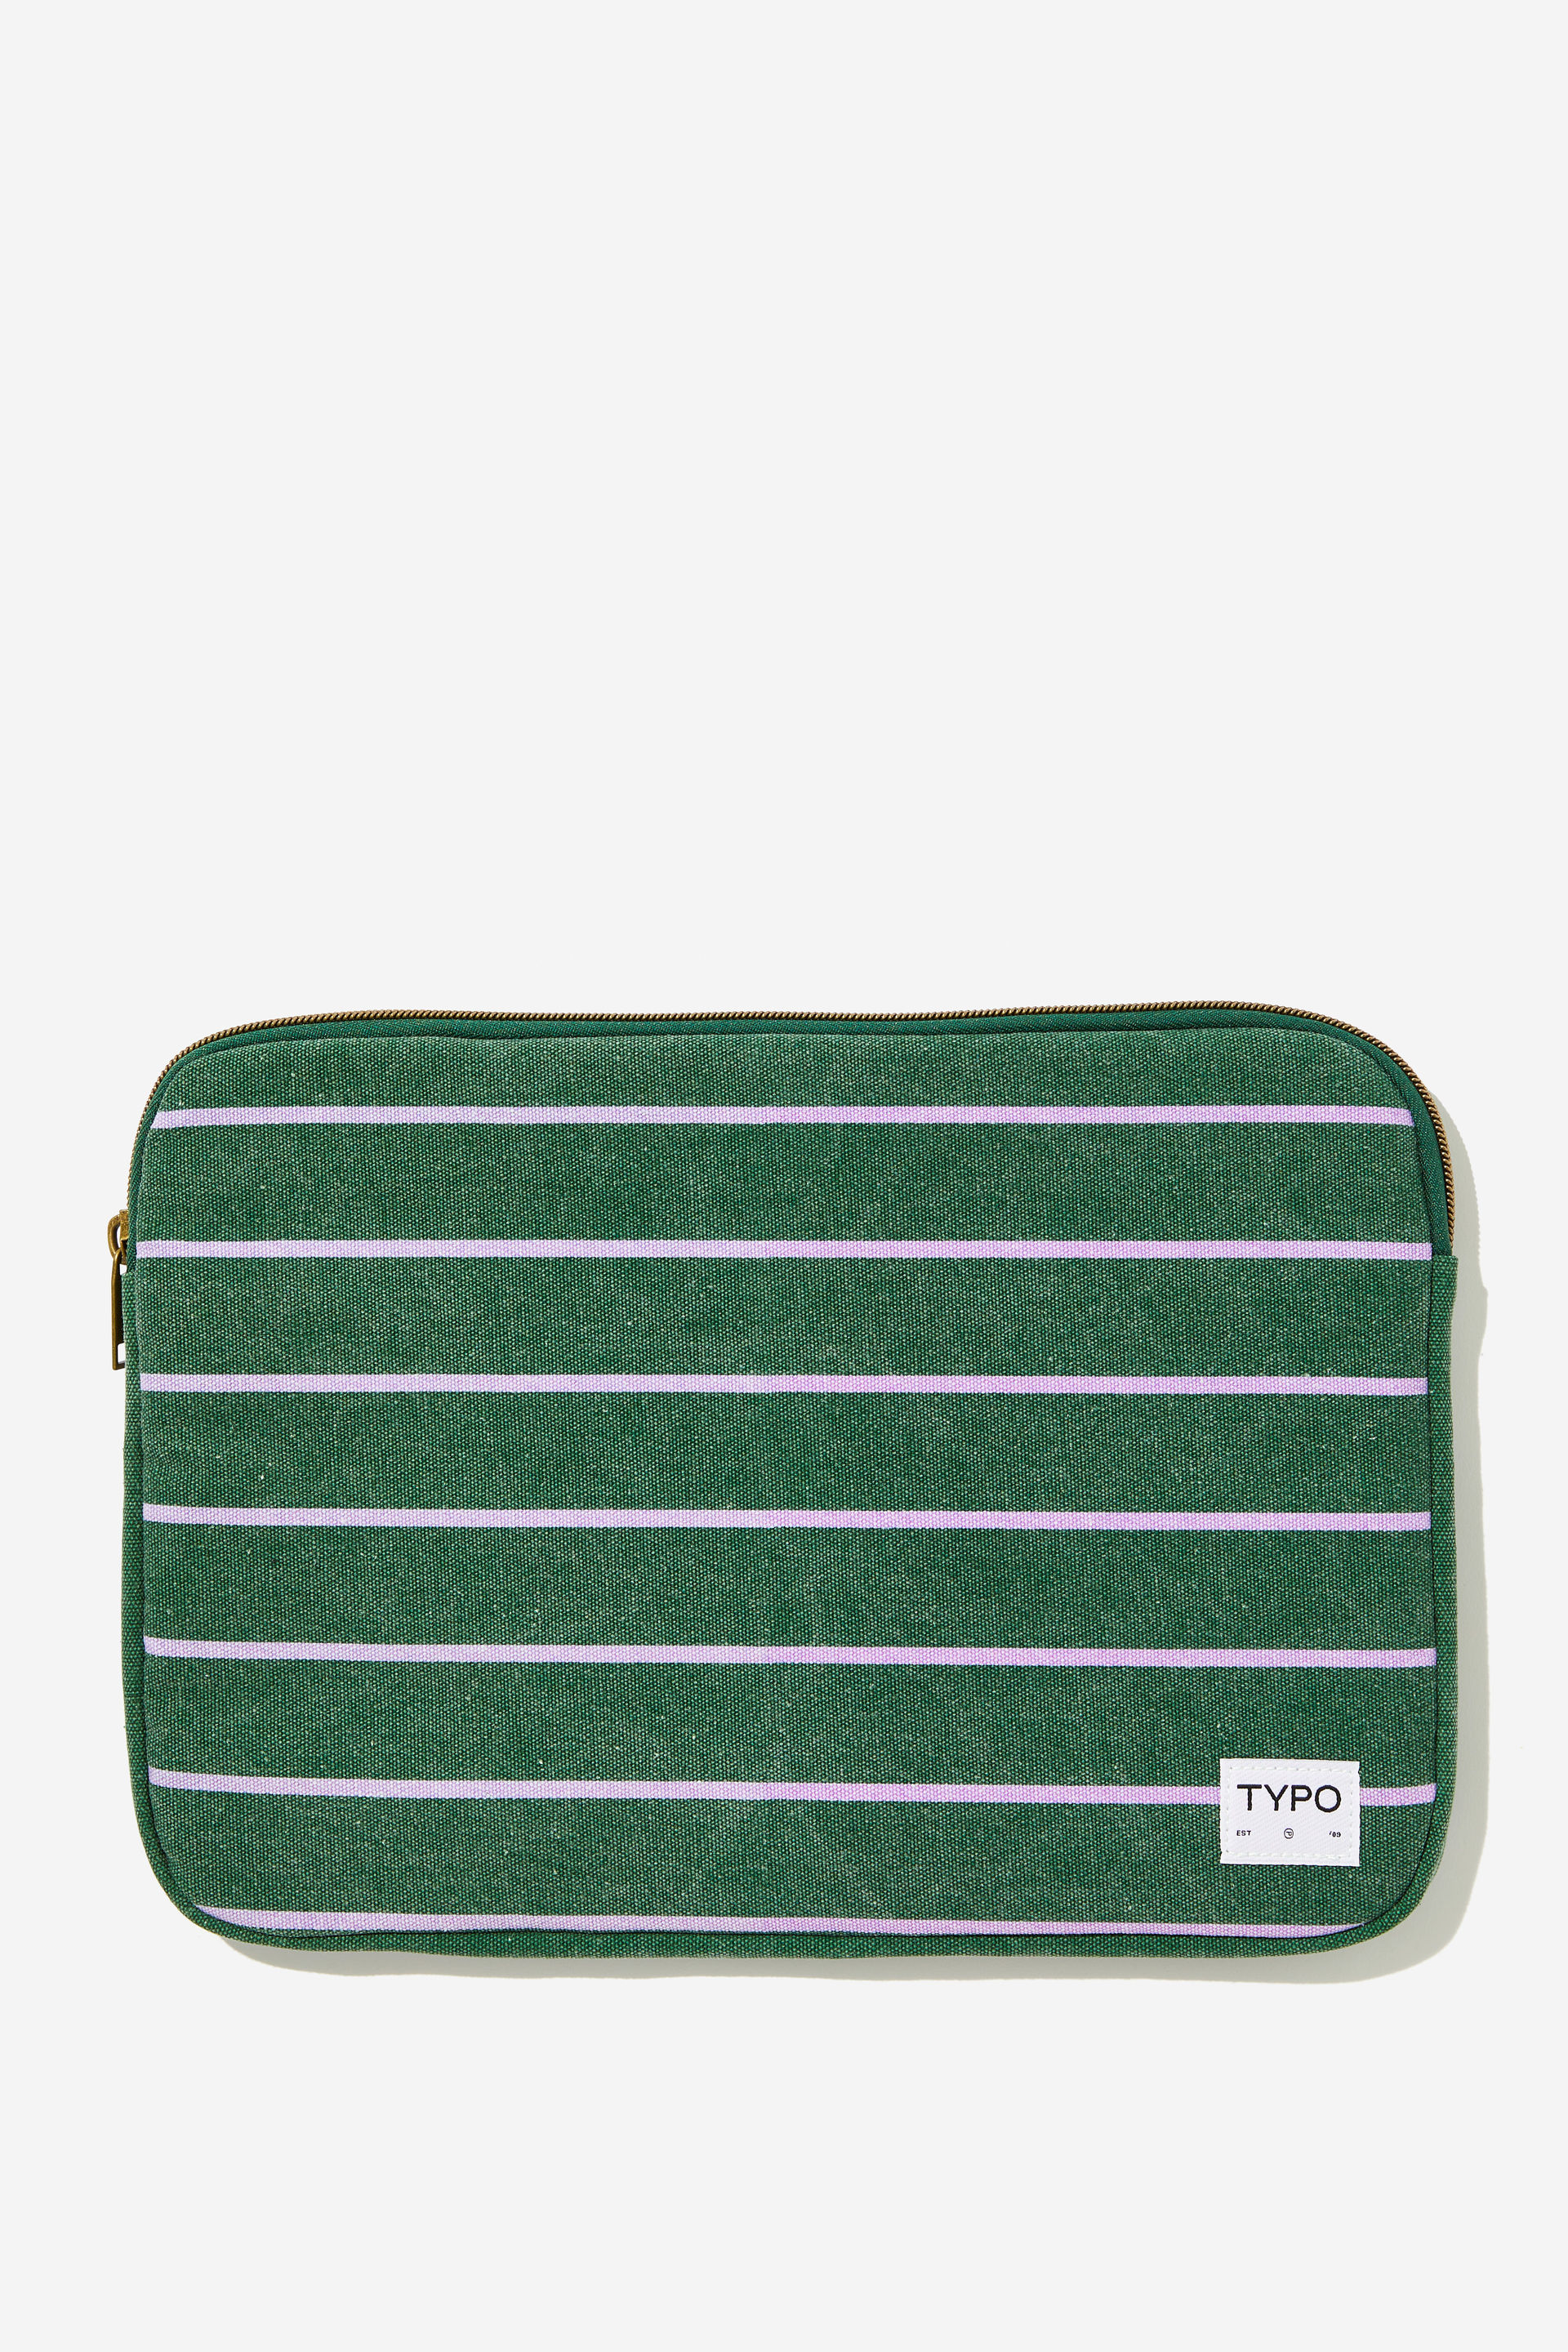 Typo - Take Me Away 13 Inch Laptop Case - Varsity stripe/ heritage green & soft lilac